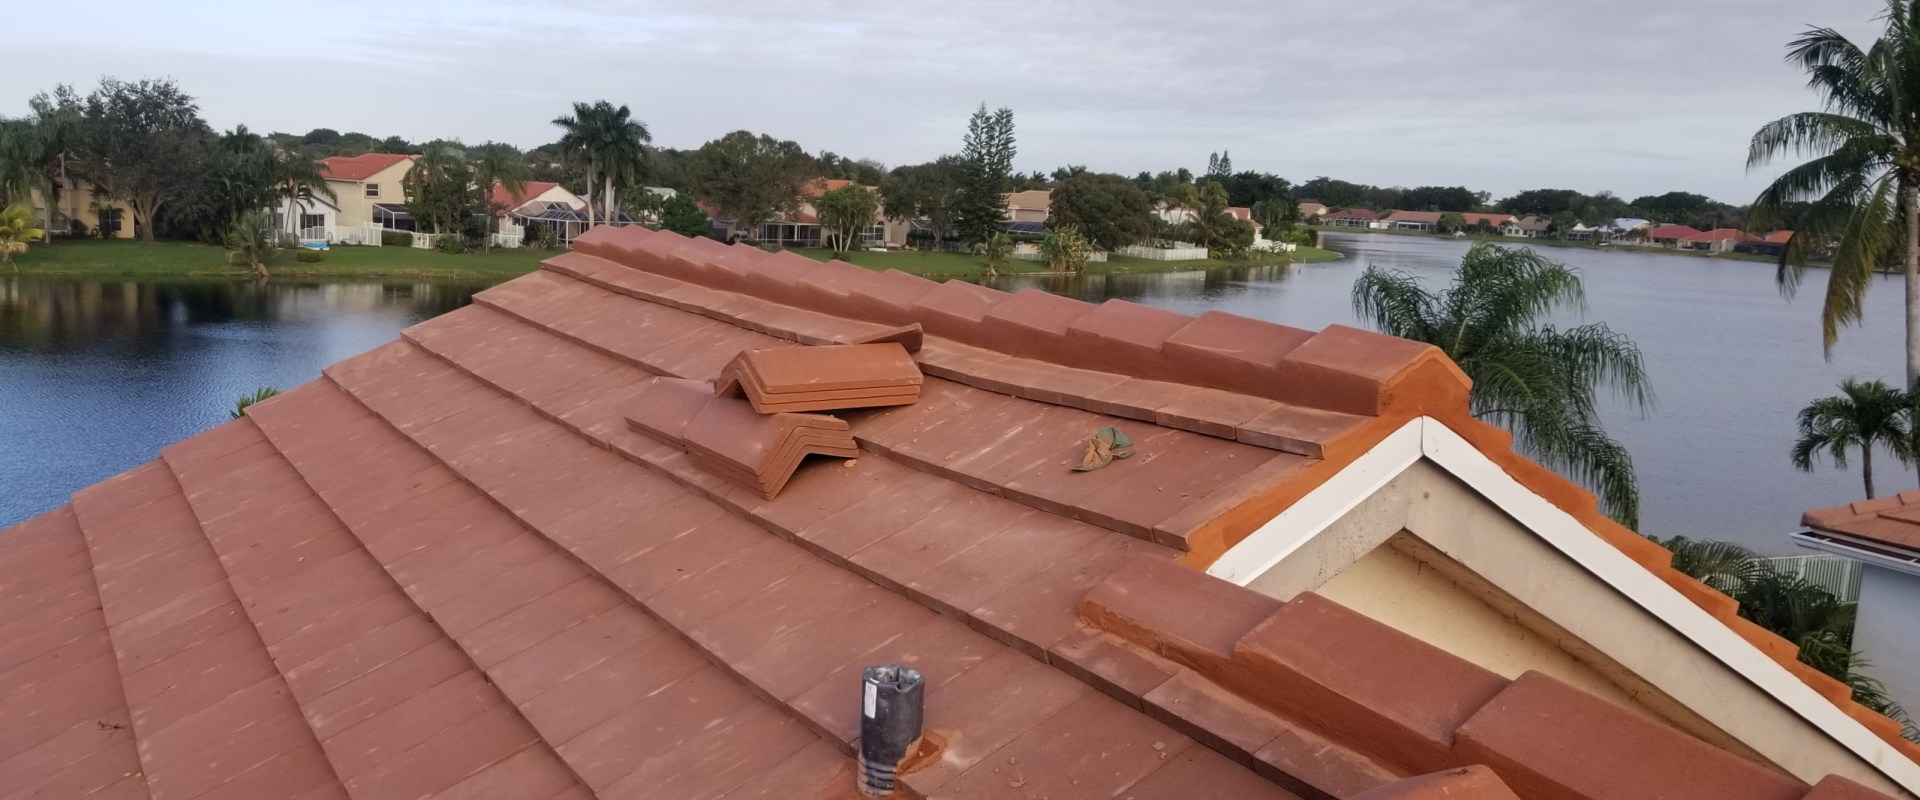 Insulating Attics in Boca Raton, FL: Flat Roofs vs Sloped Roofs